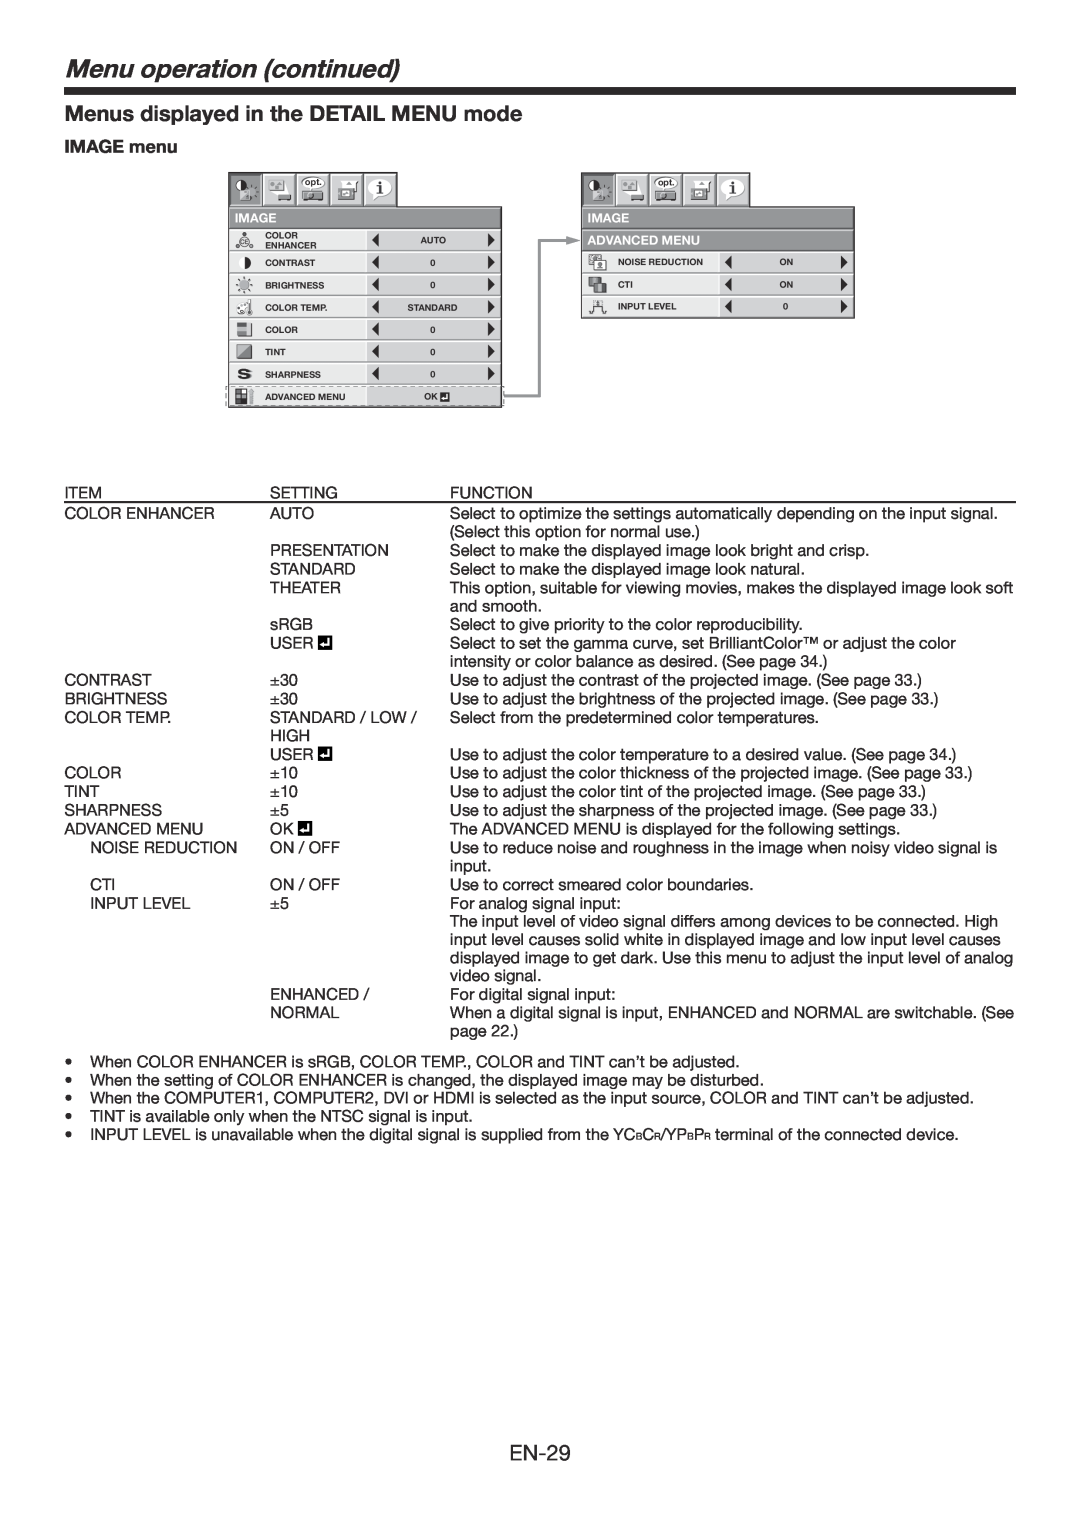 Mitsumi electronic WD3300U user manual Menu operation continued, Menus displayed in the DETAIL MENU mode, EN-29, IMAGE menu 